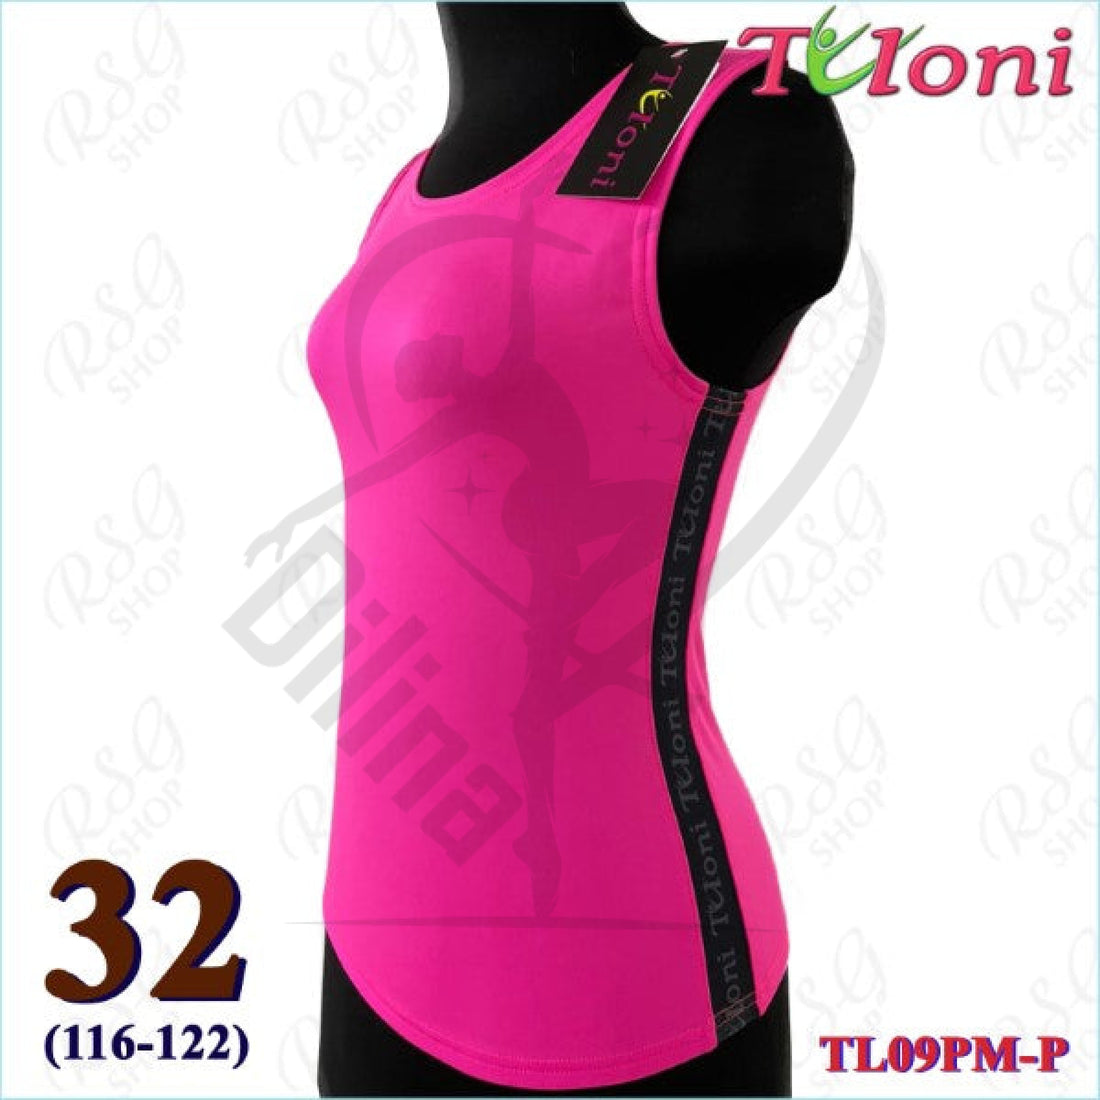 Tuloni Long Mesh Tank Top Pink 32 (116-122) T Shirts & Tops